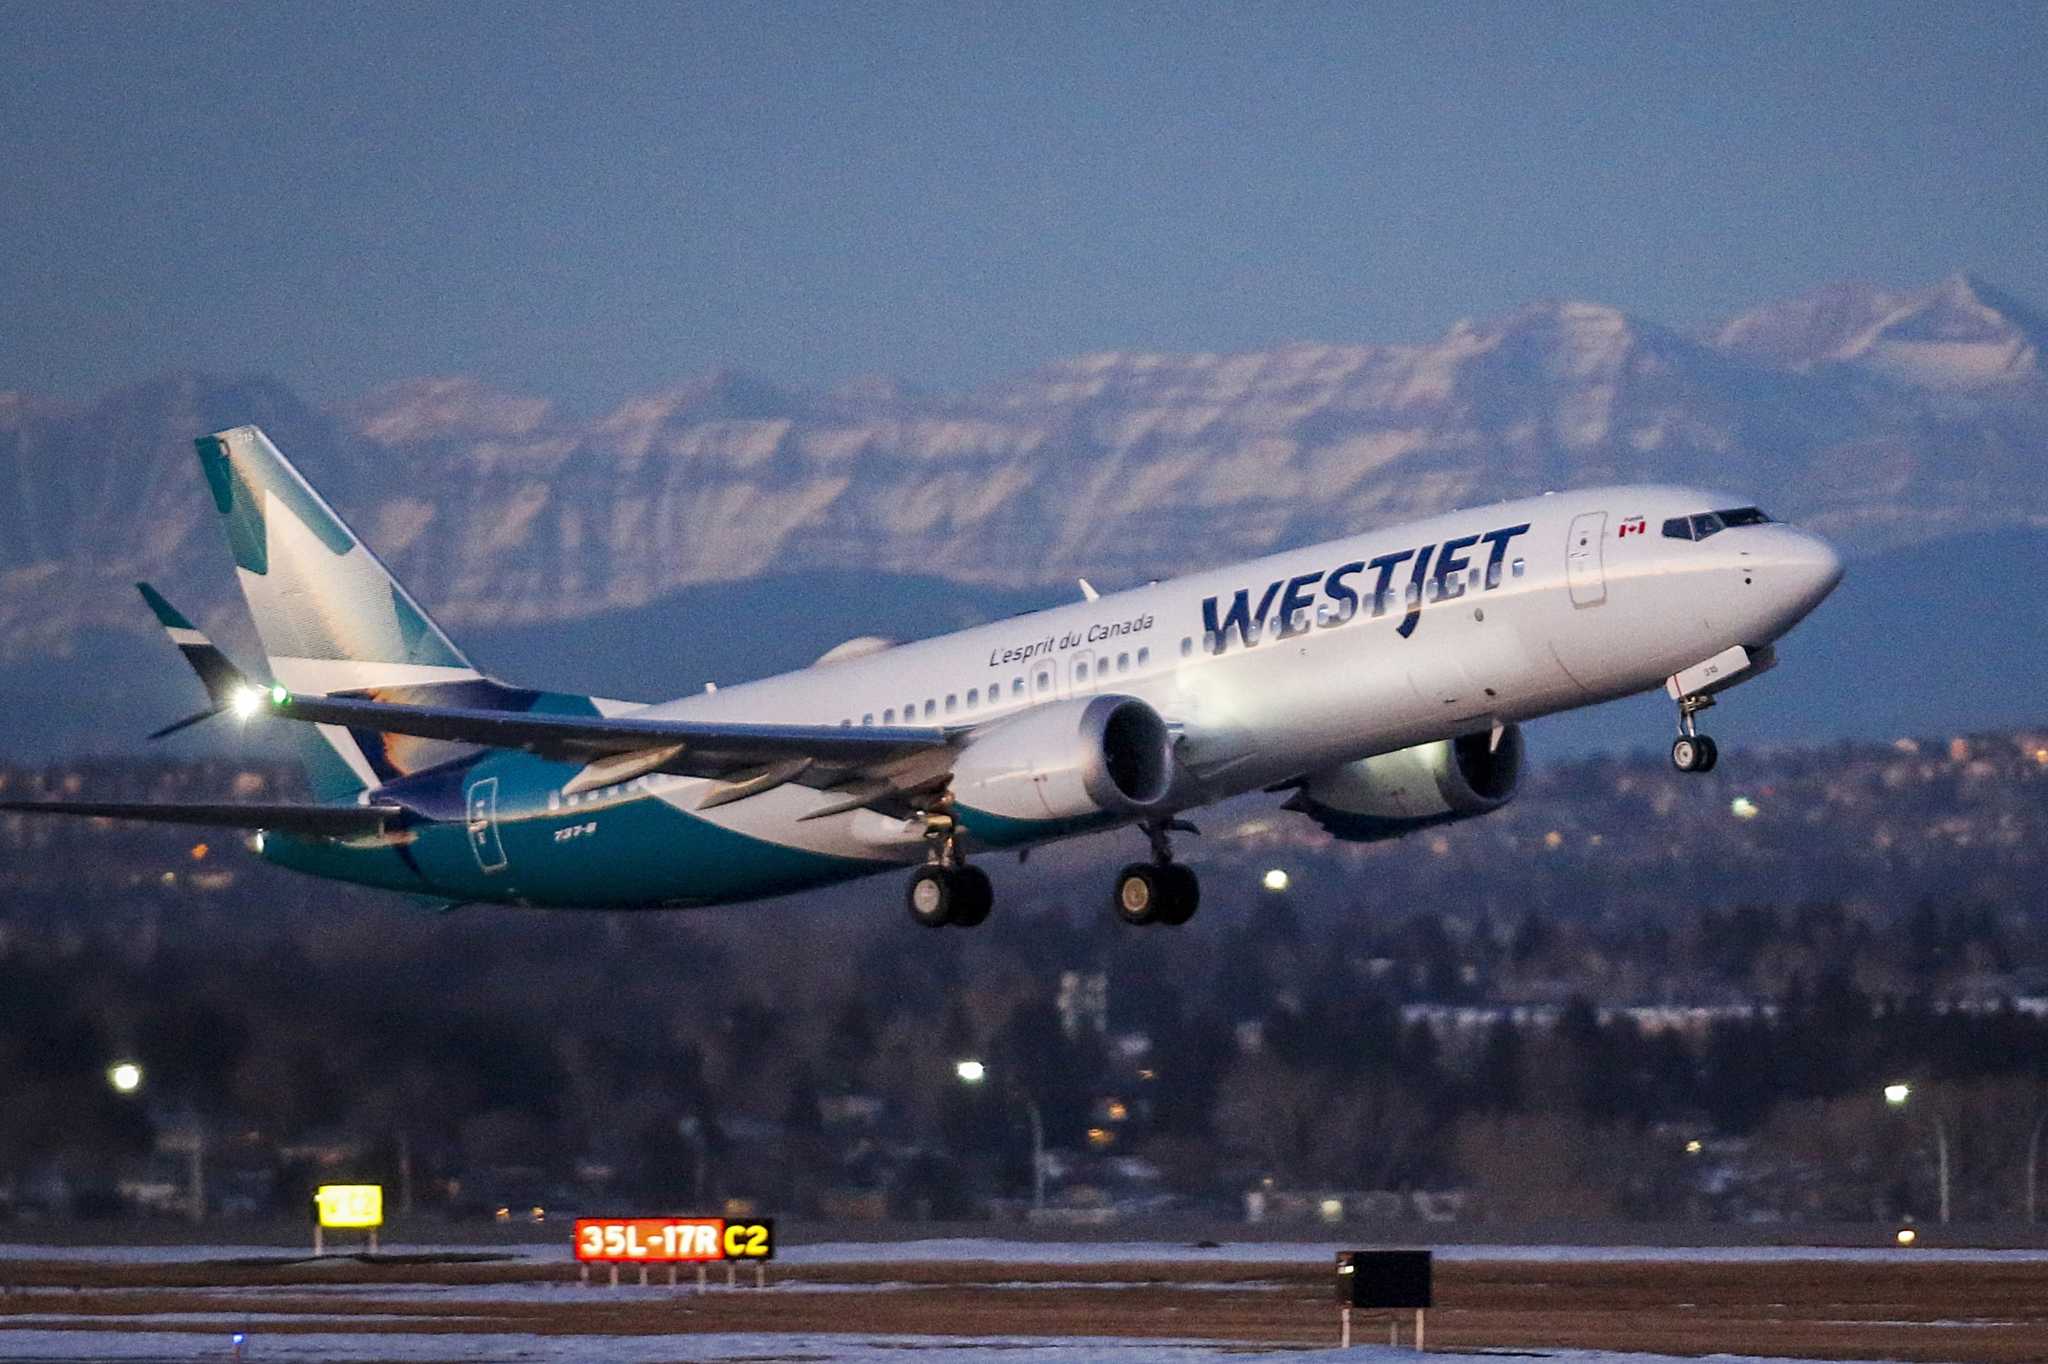 Canadian airline WestJet cancels at least 235 flights after surprise strike by mechanics union